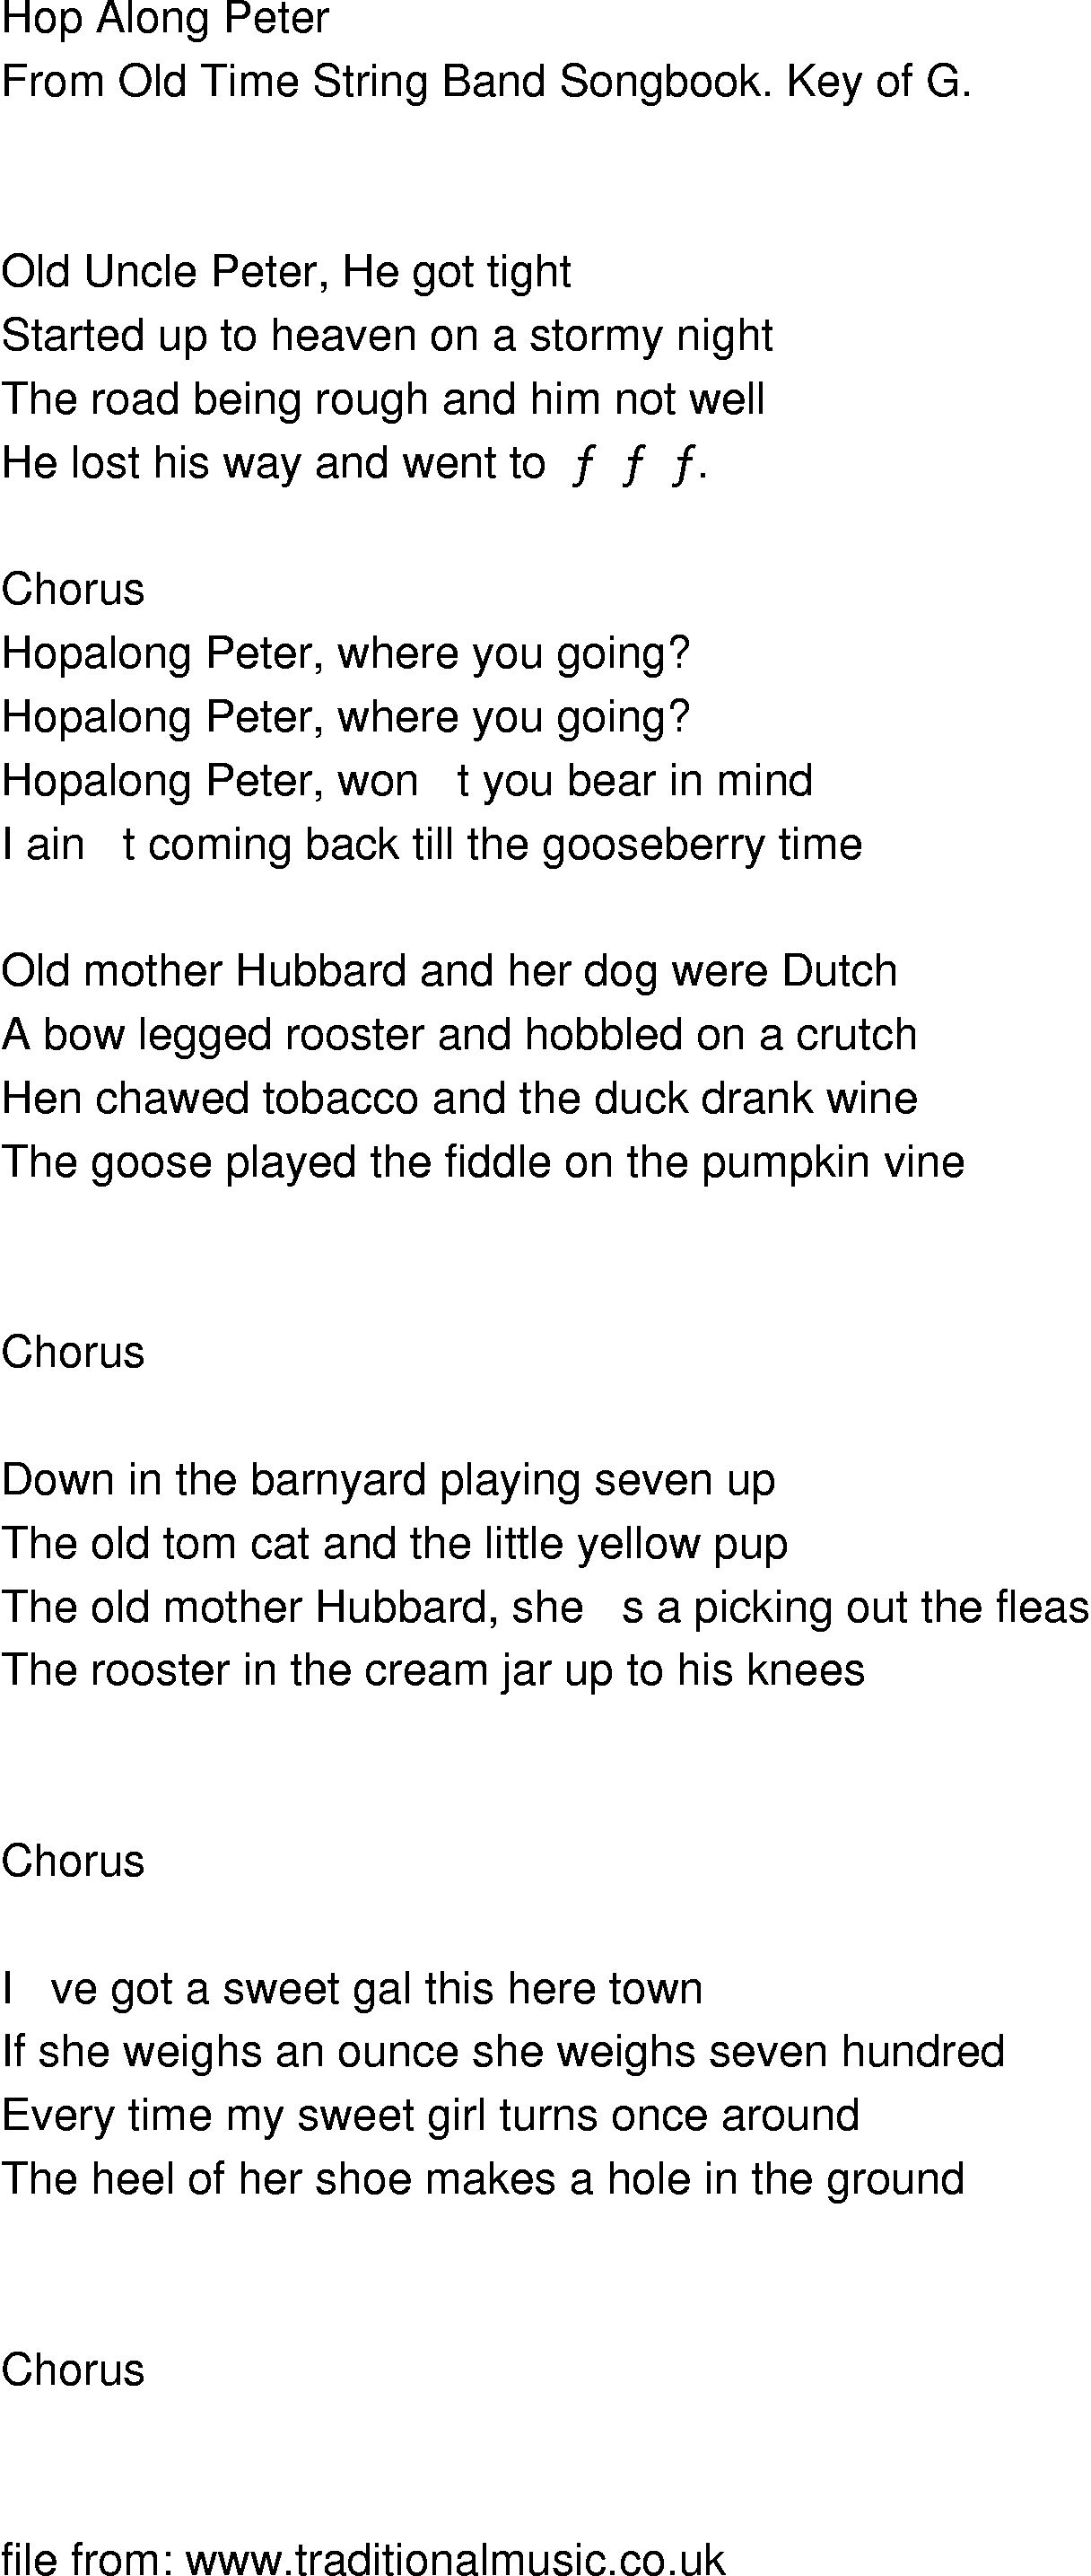 Old-Time (oldtimey) Song Lyrics - hop along peter